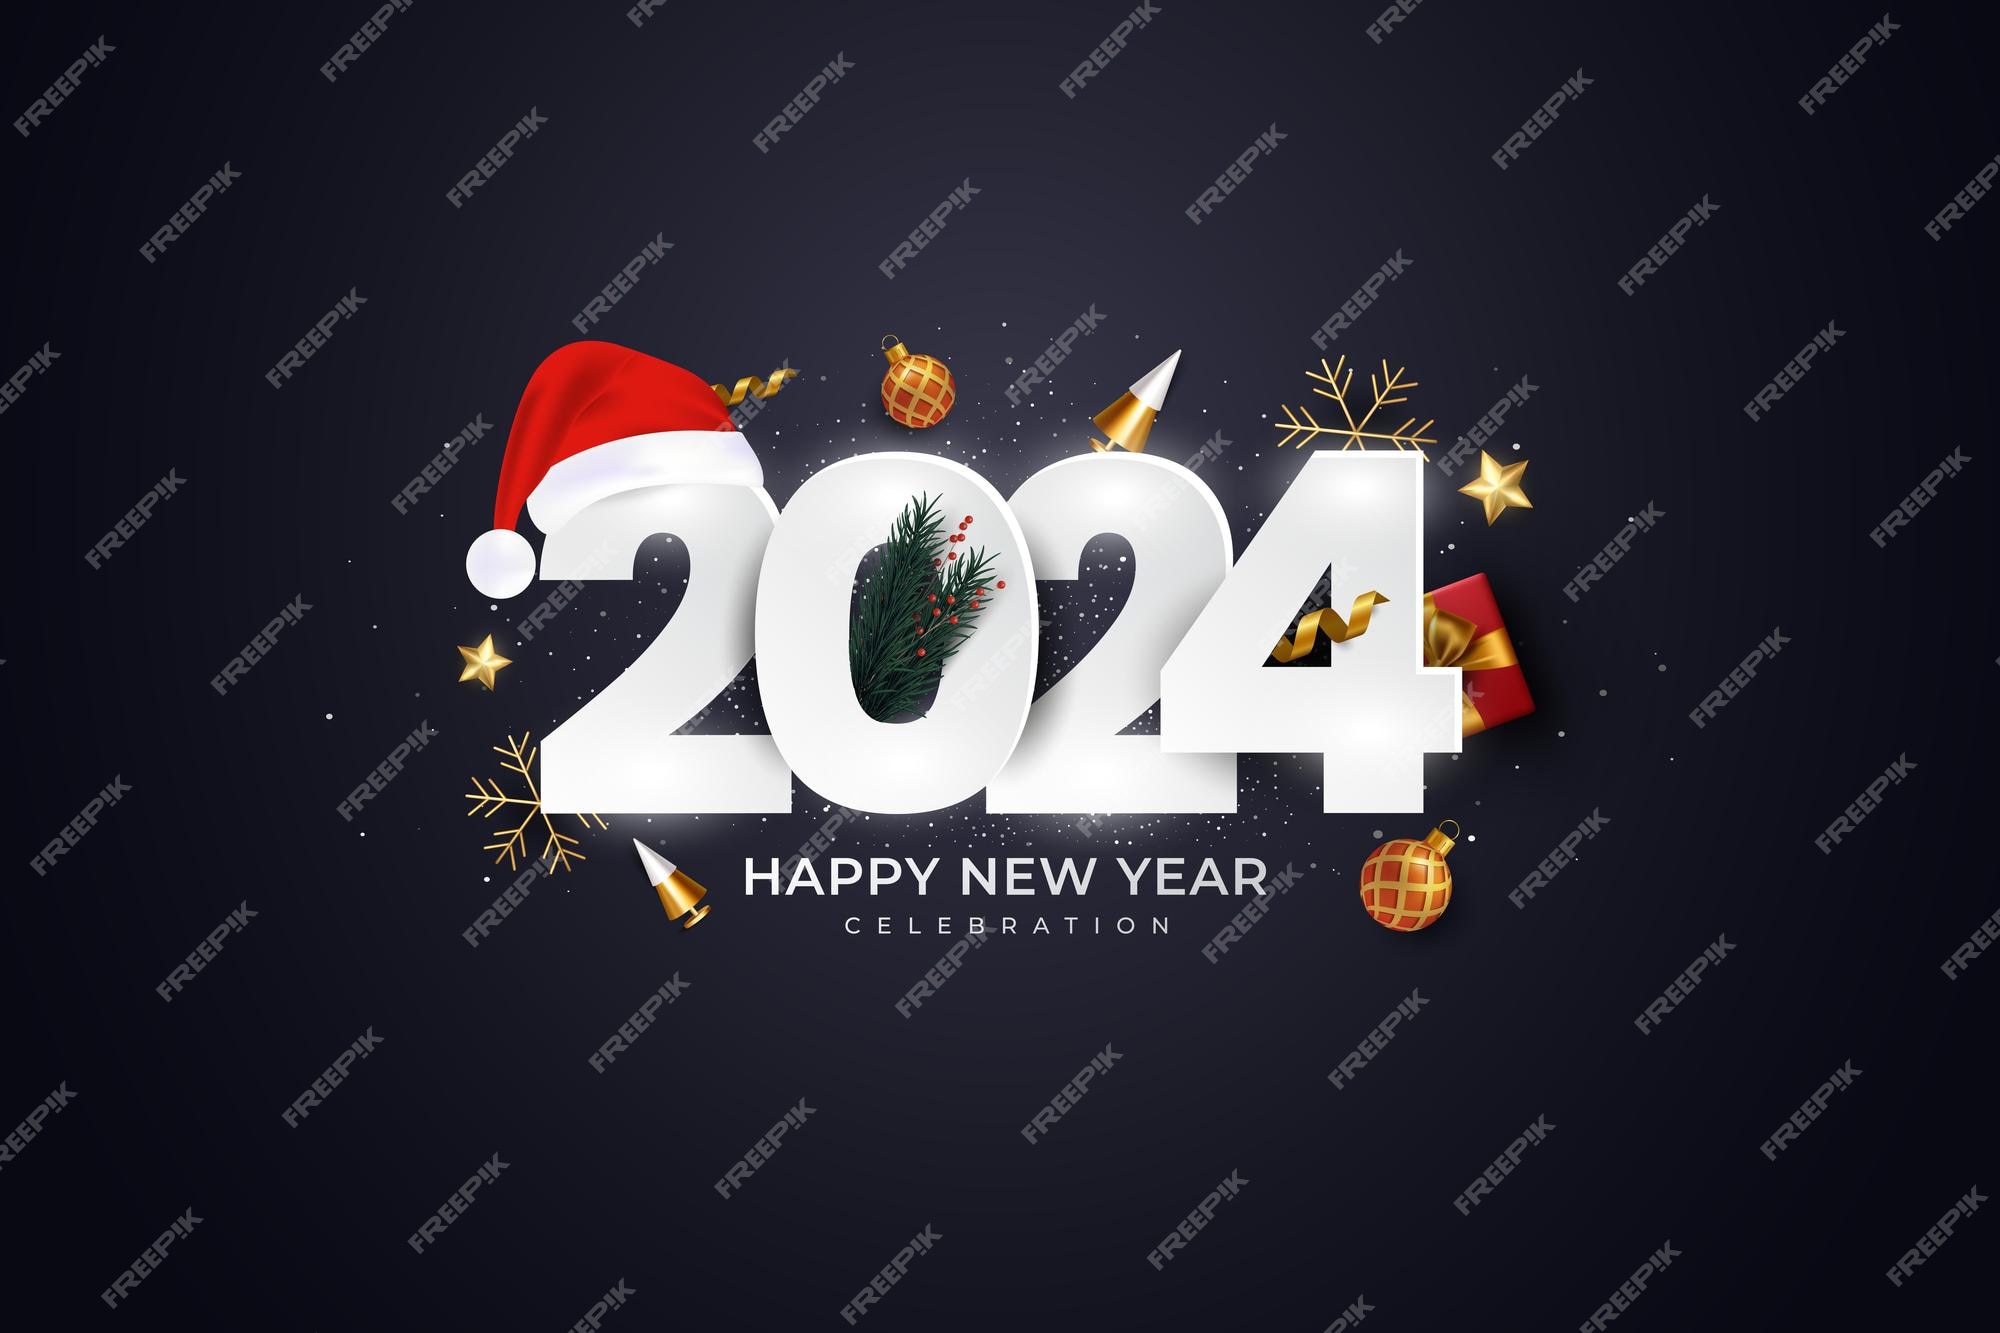 Premium Vector Happy new year 2024 2024 new year celebration concept